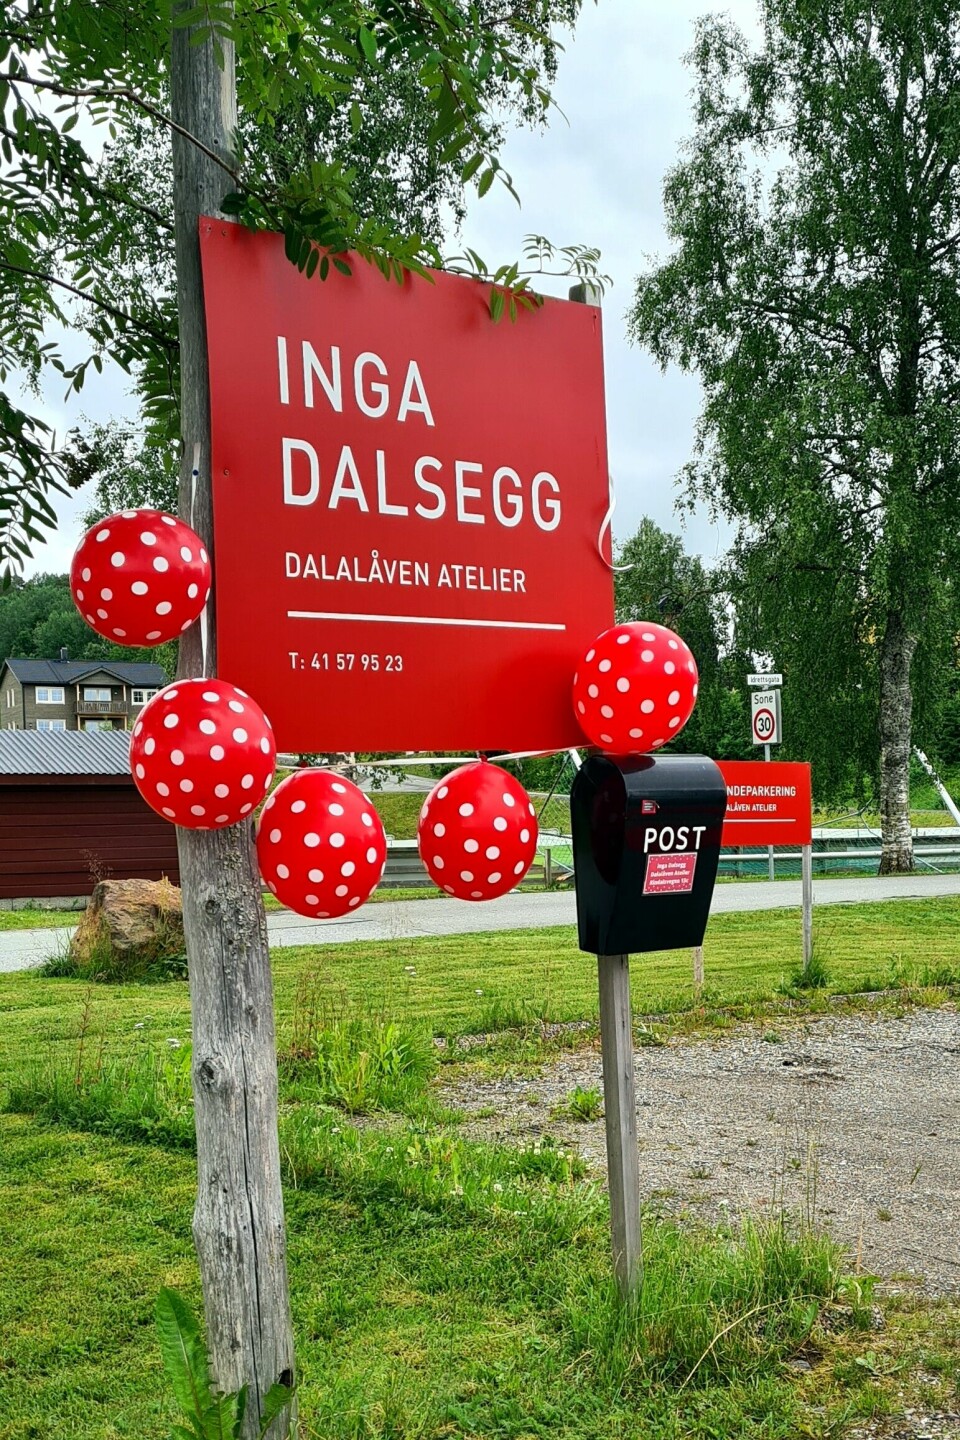 Raud plakat til Dalalåven pynta med raude kvitprikka ballongar